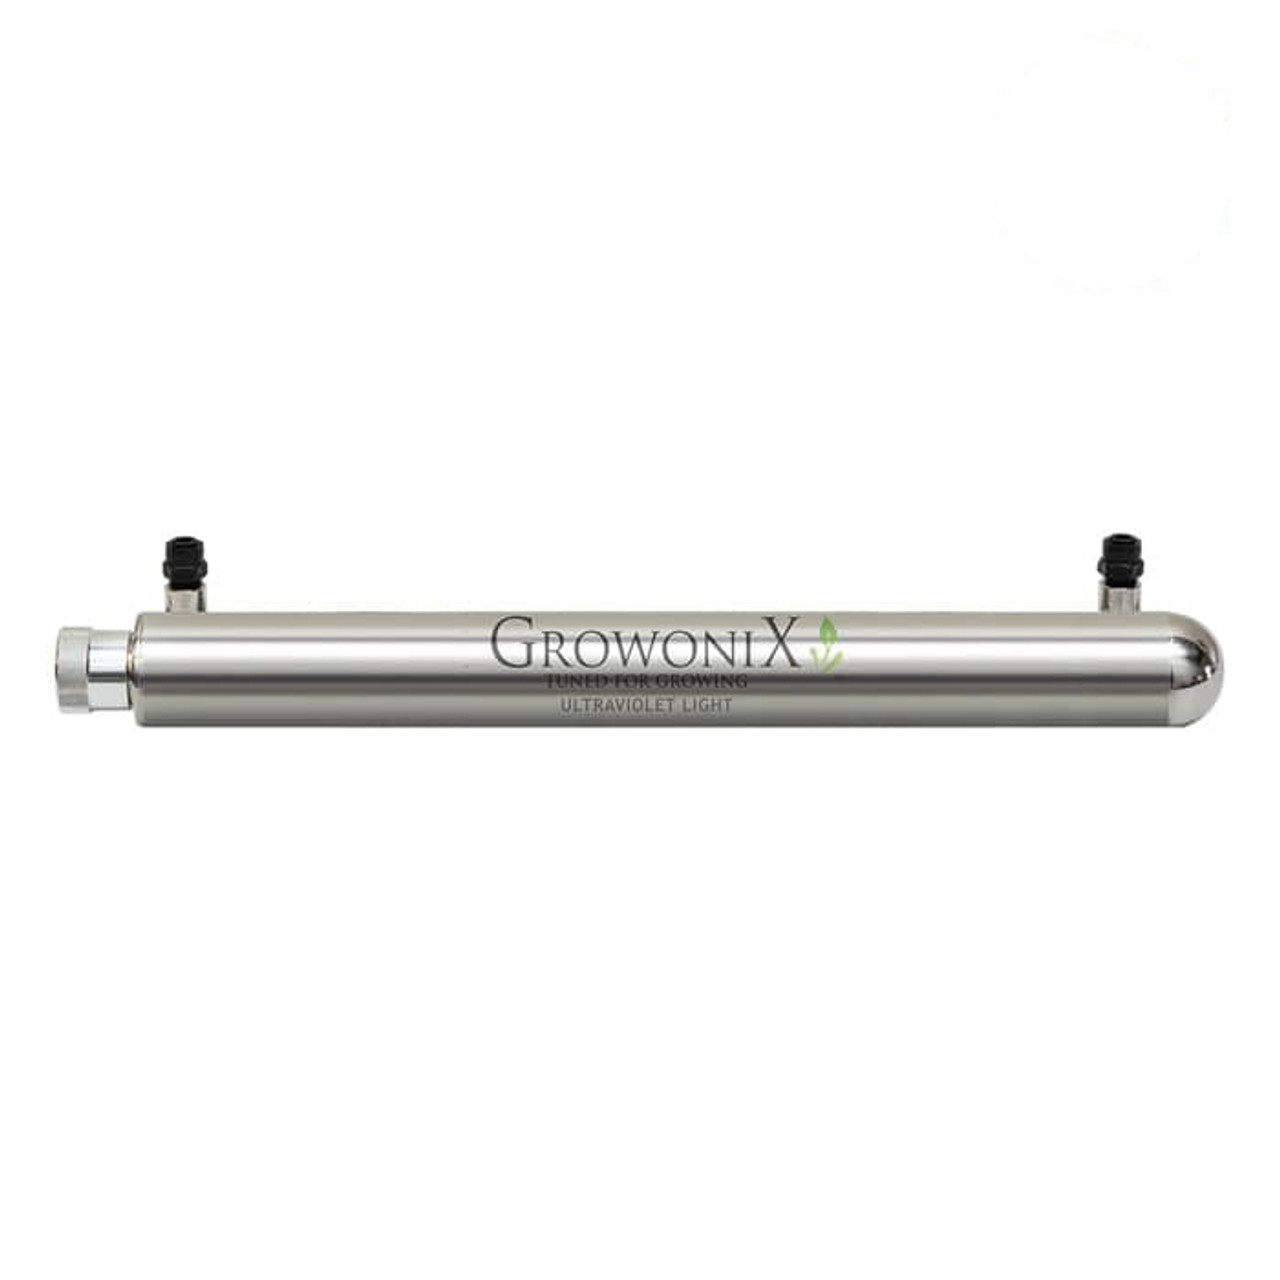 Growonix XL UV Filter